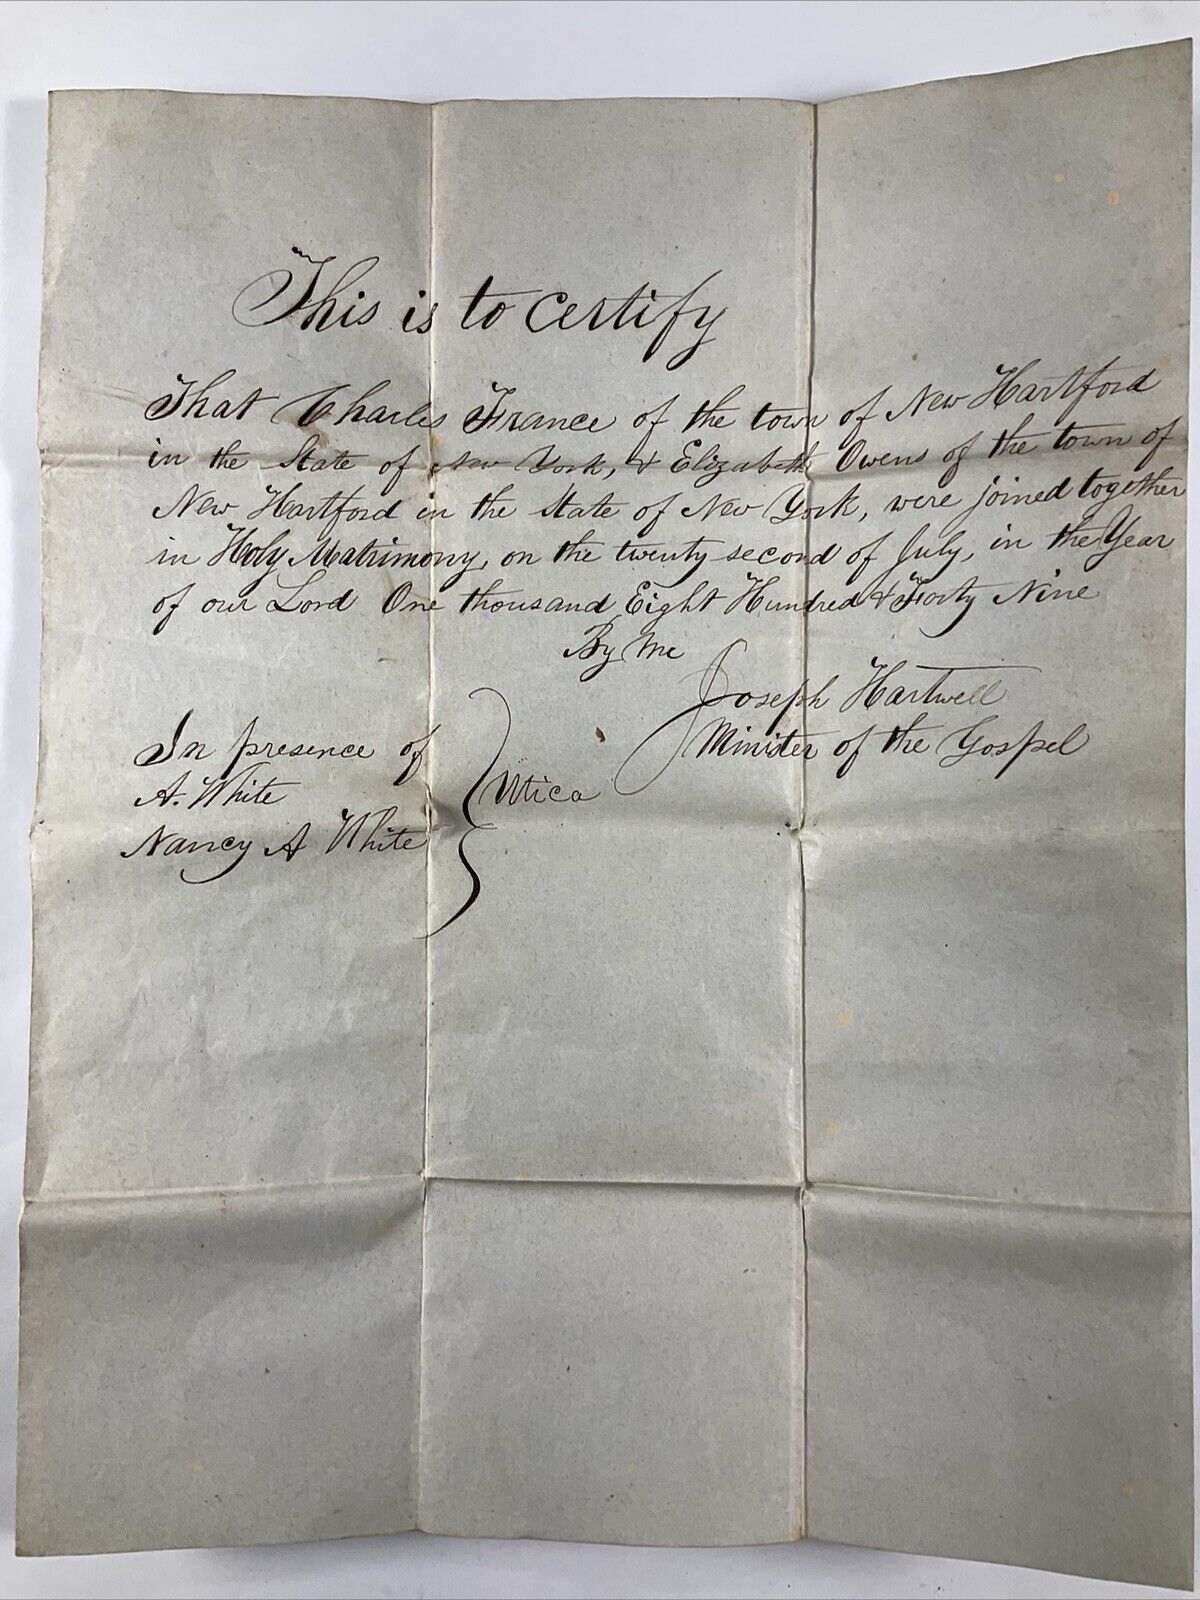 1849 New Harford New York Antique Marriage Handwritten Certificate